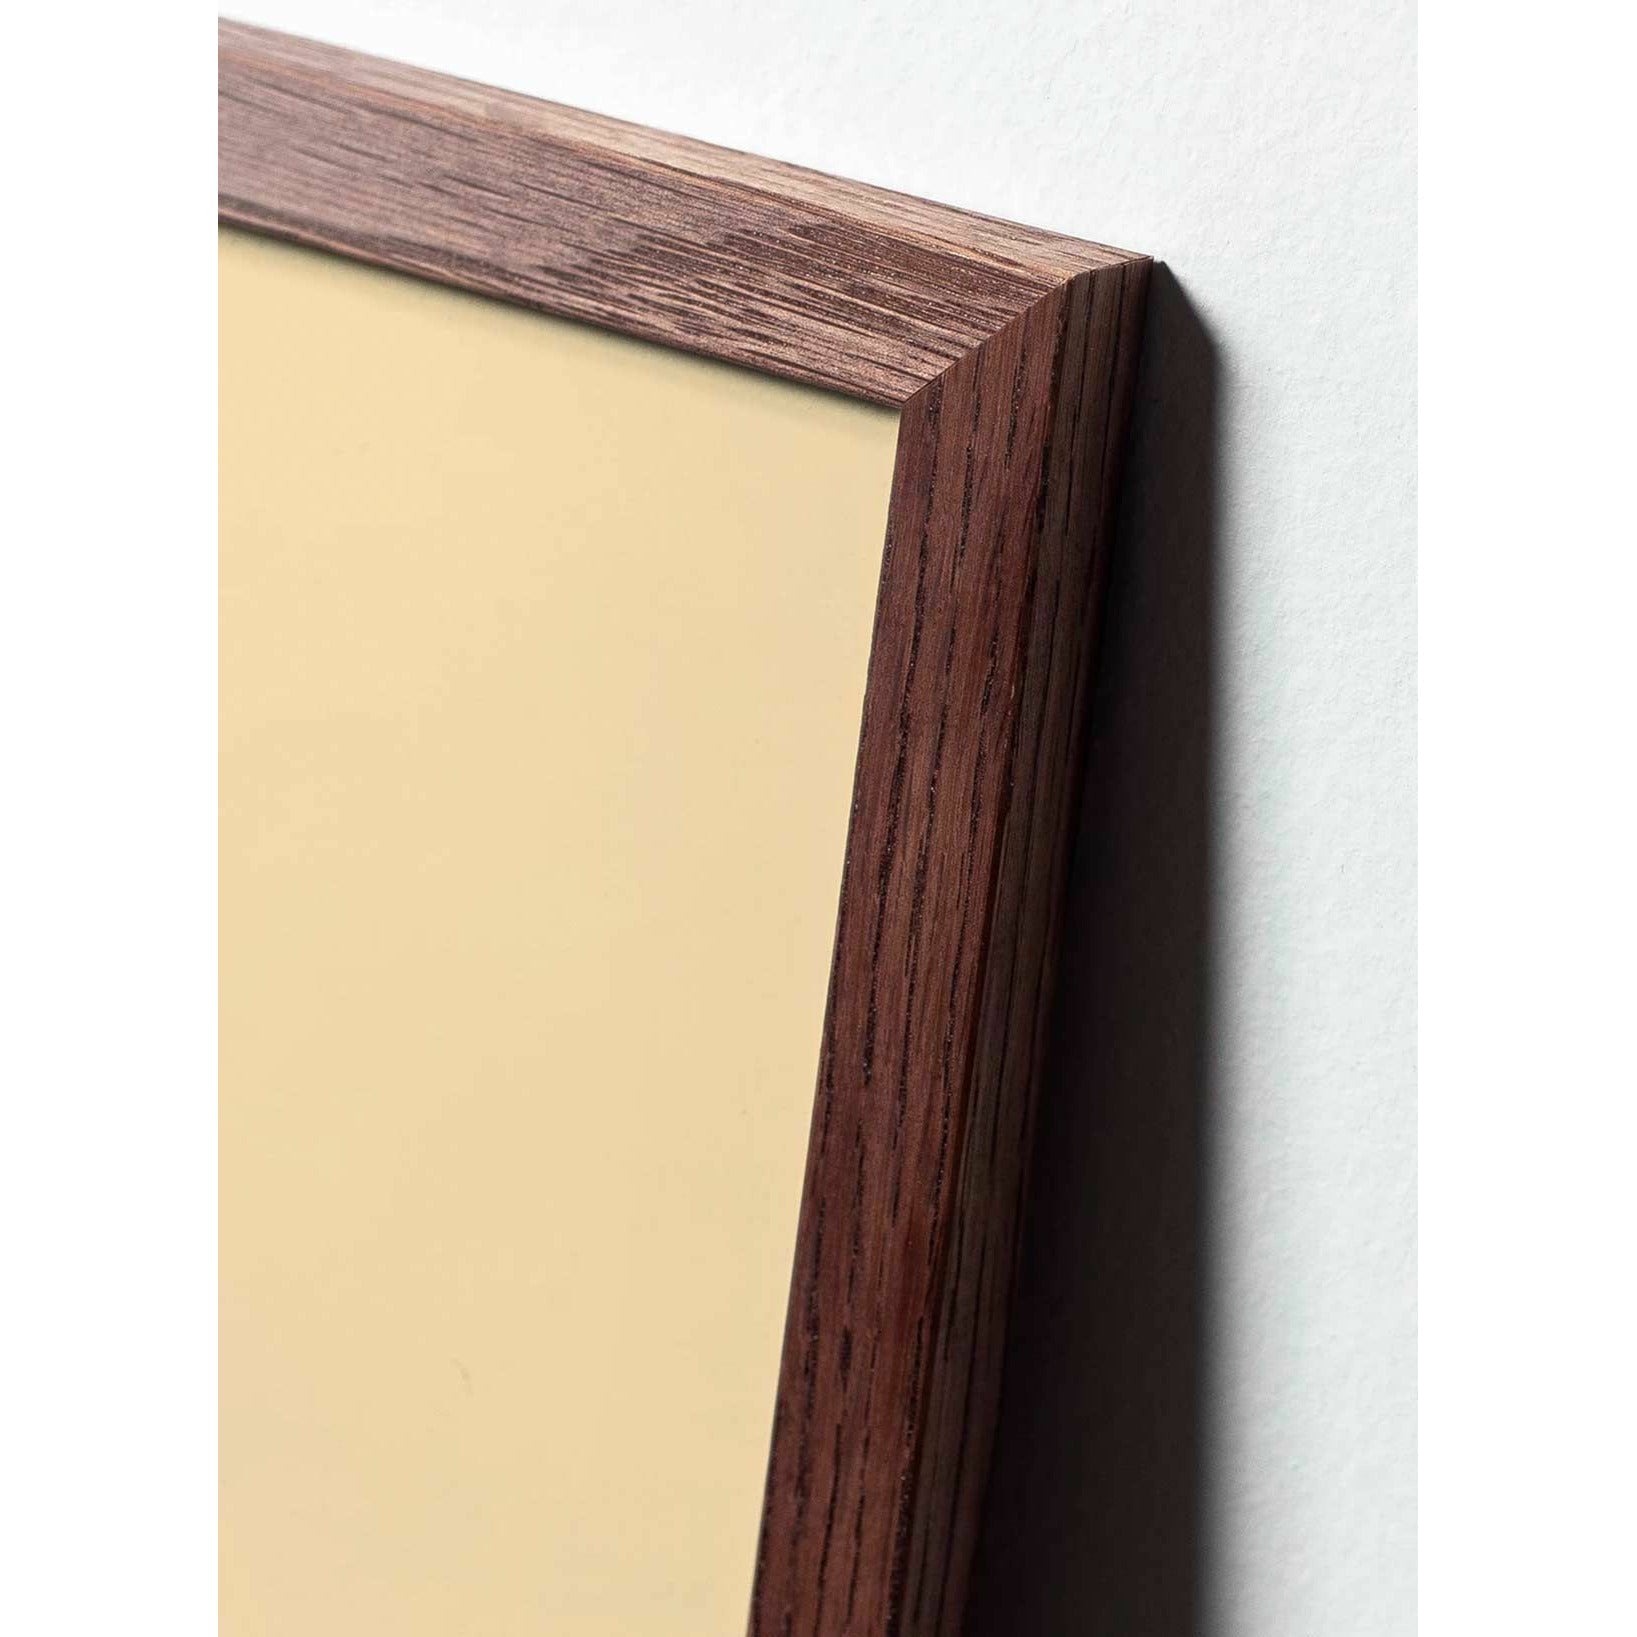 Brainchild Pine Cone Design Icon Poster, Frame Made Of Dark Wood 30x40 Cm, Orange